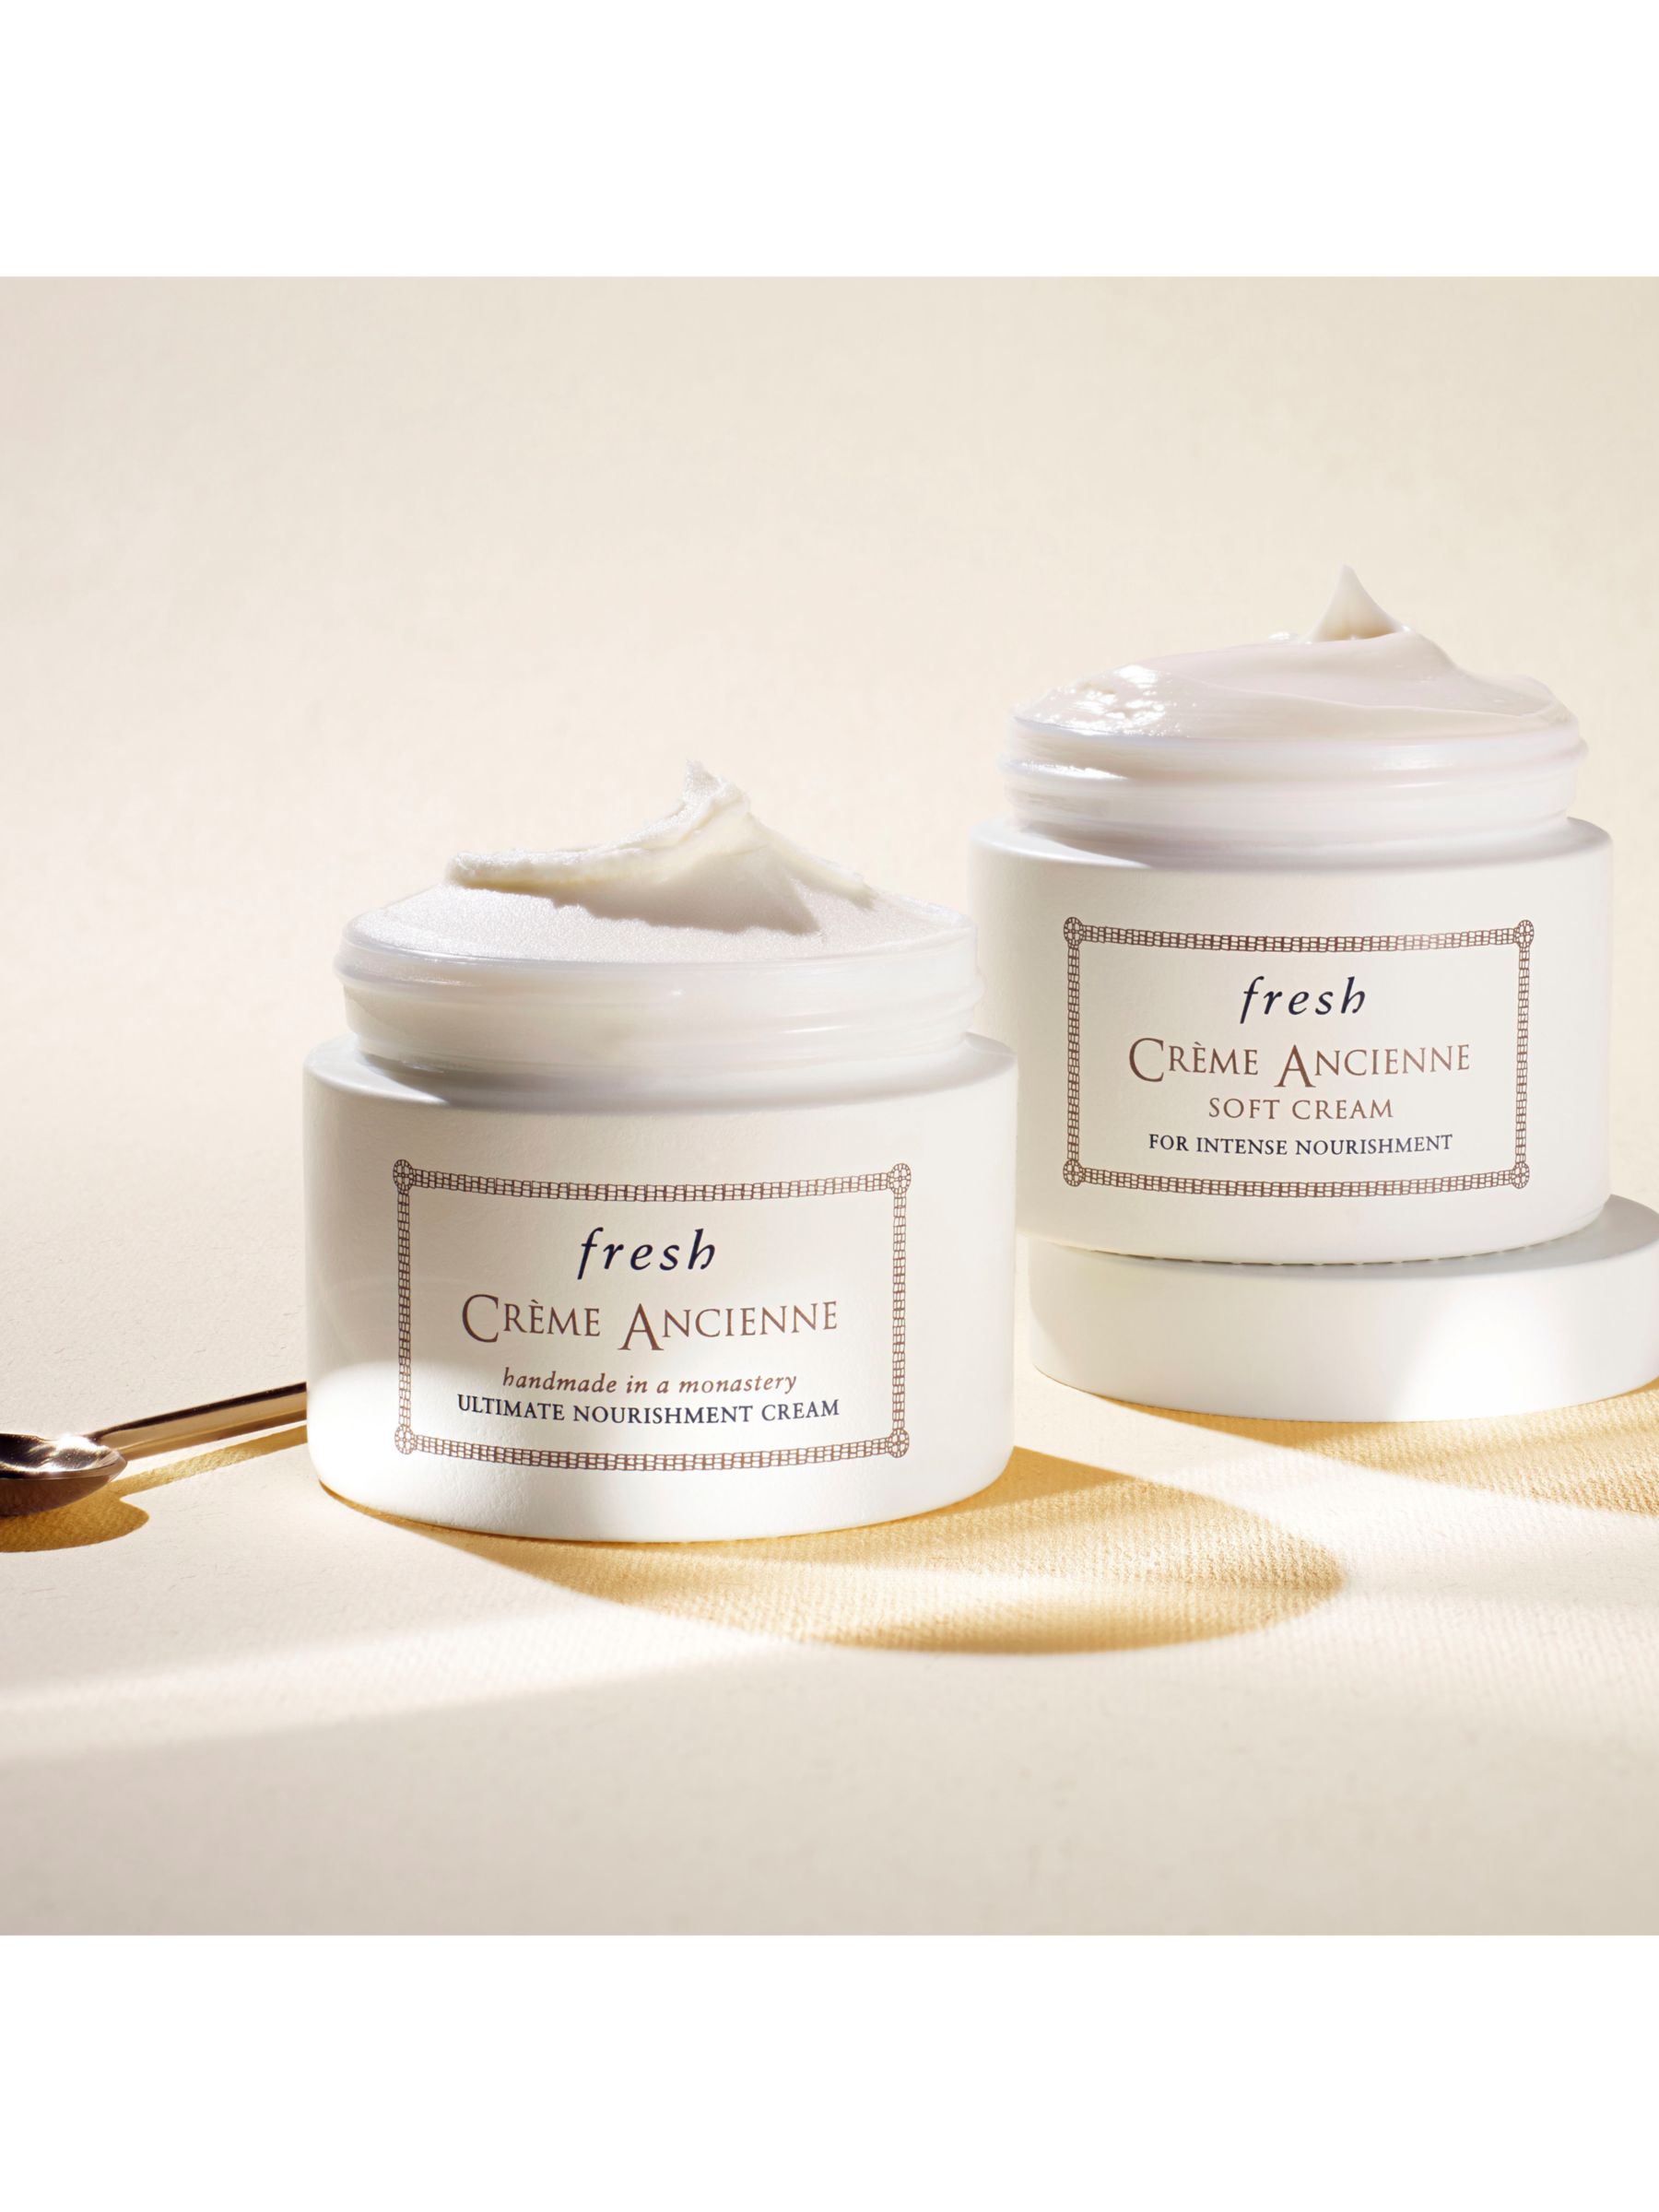 Fresh Crème Ancienne Soft Cream for Intense Nourishment, 30ml 7